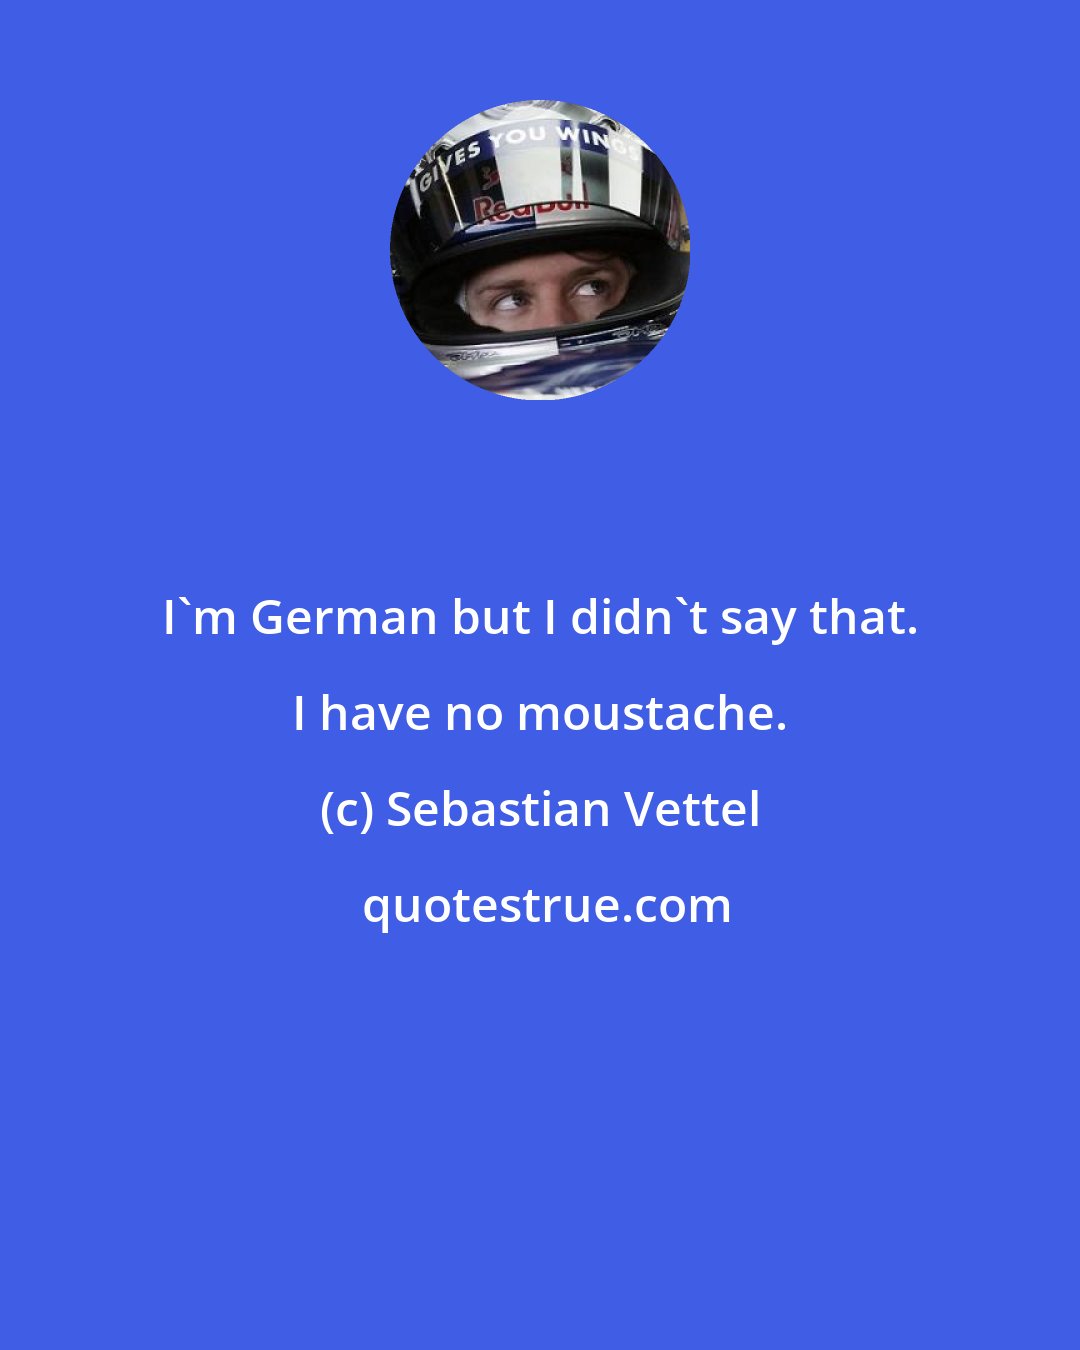 Sebastian Vettel: I'm German but I didn't say that. I have no moustache.